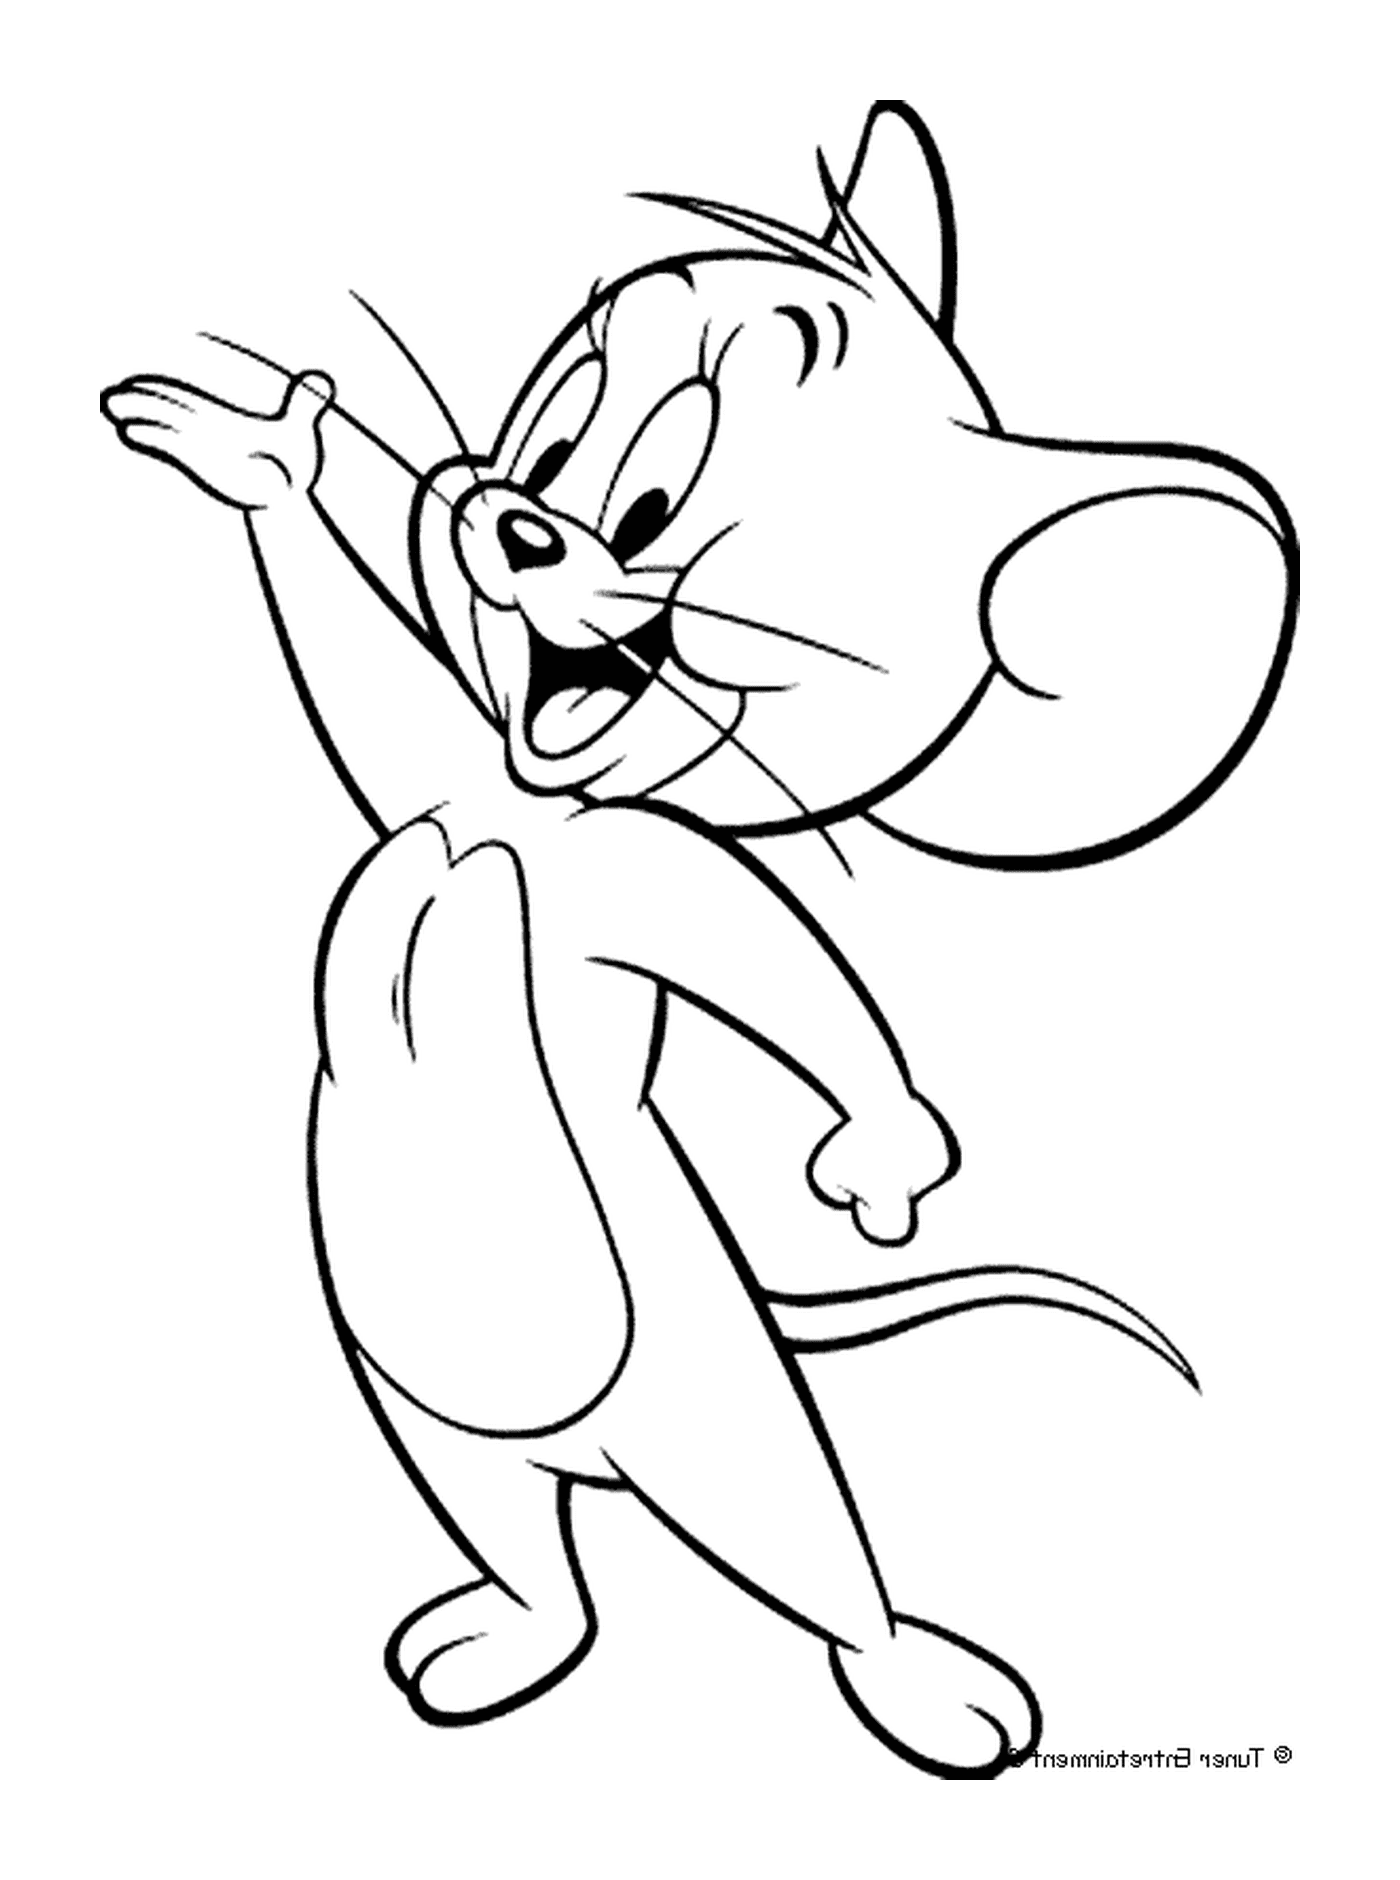  Jerry el ratón 